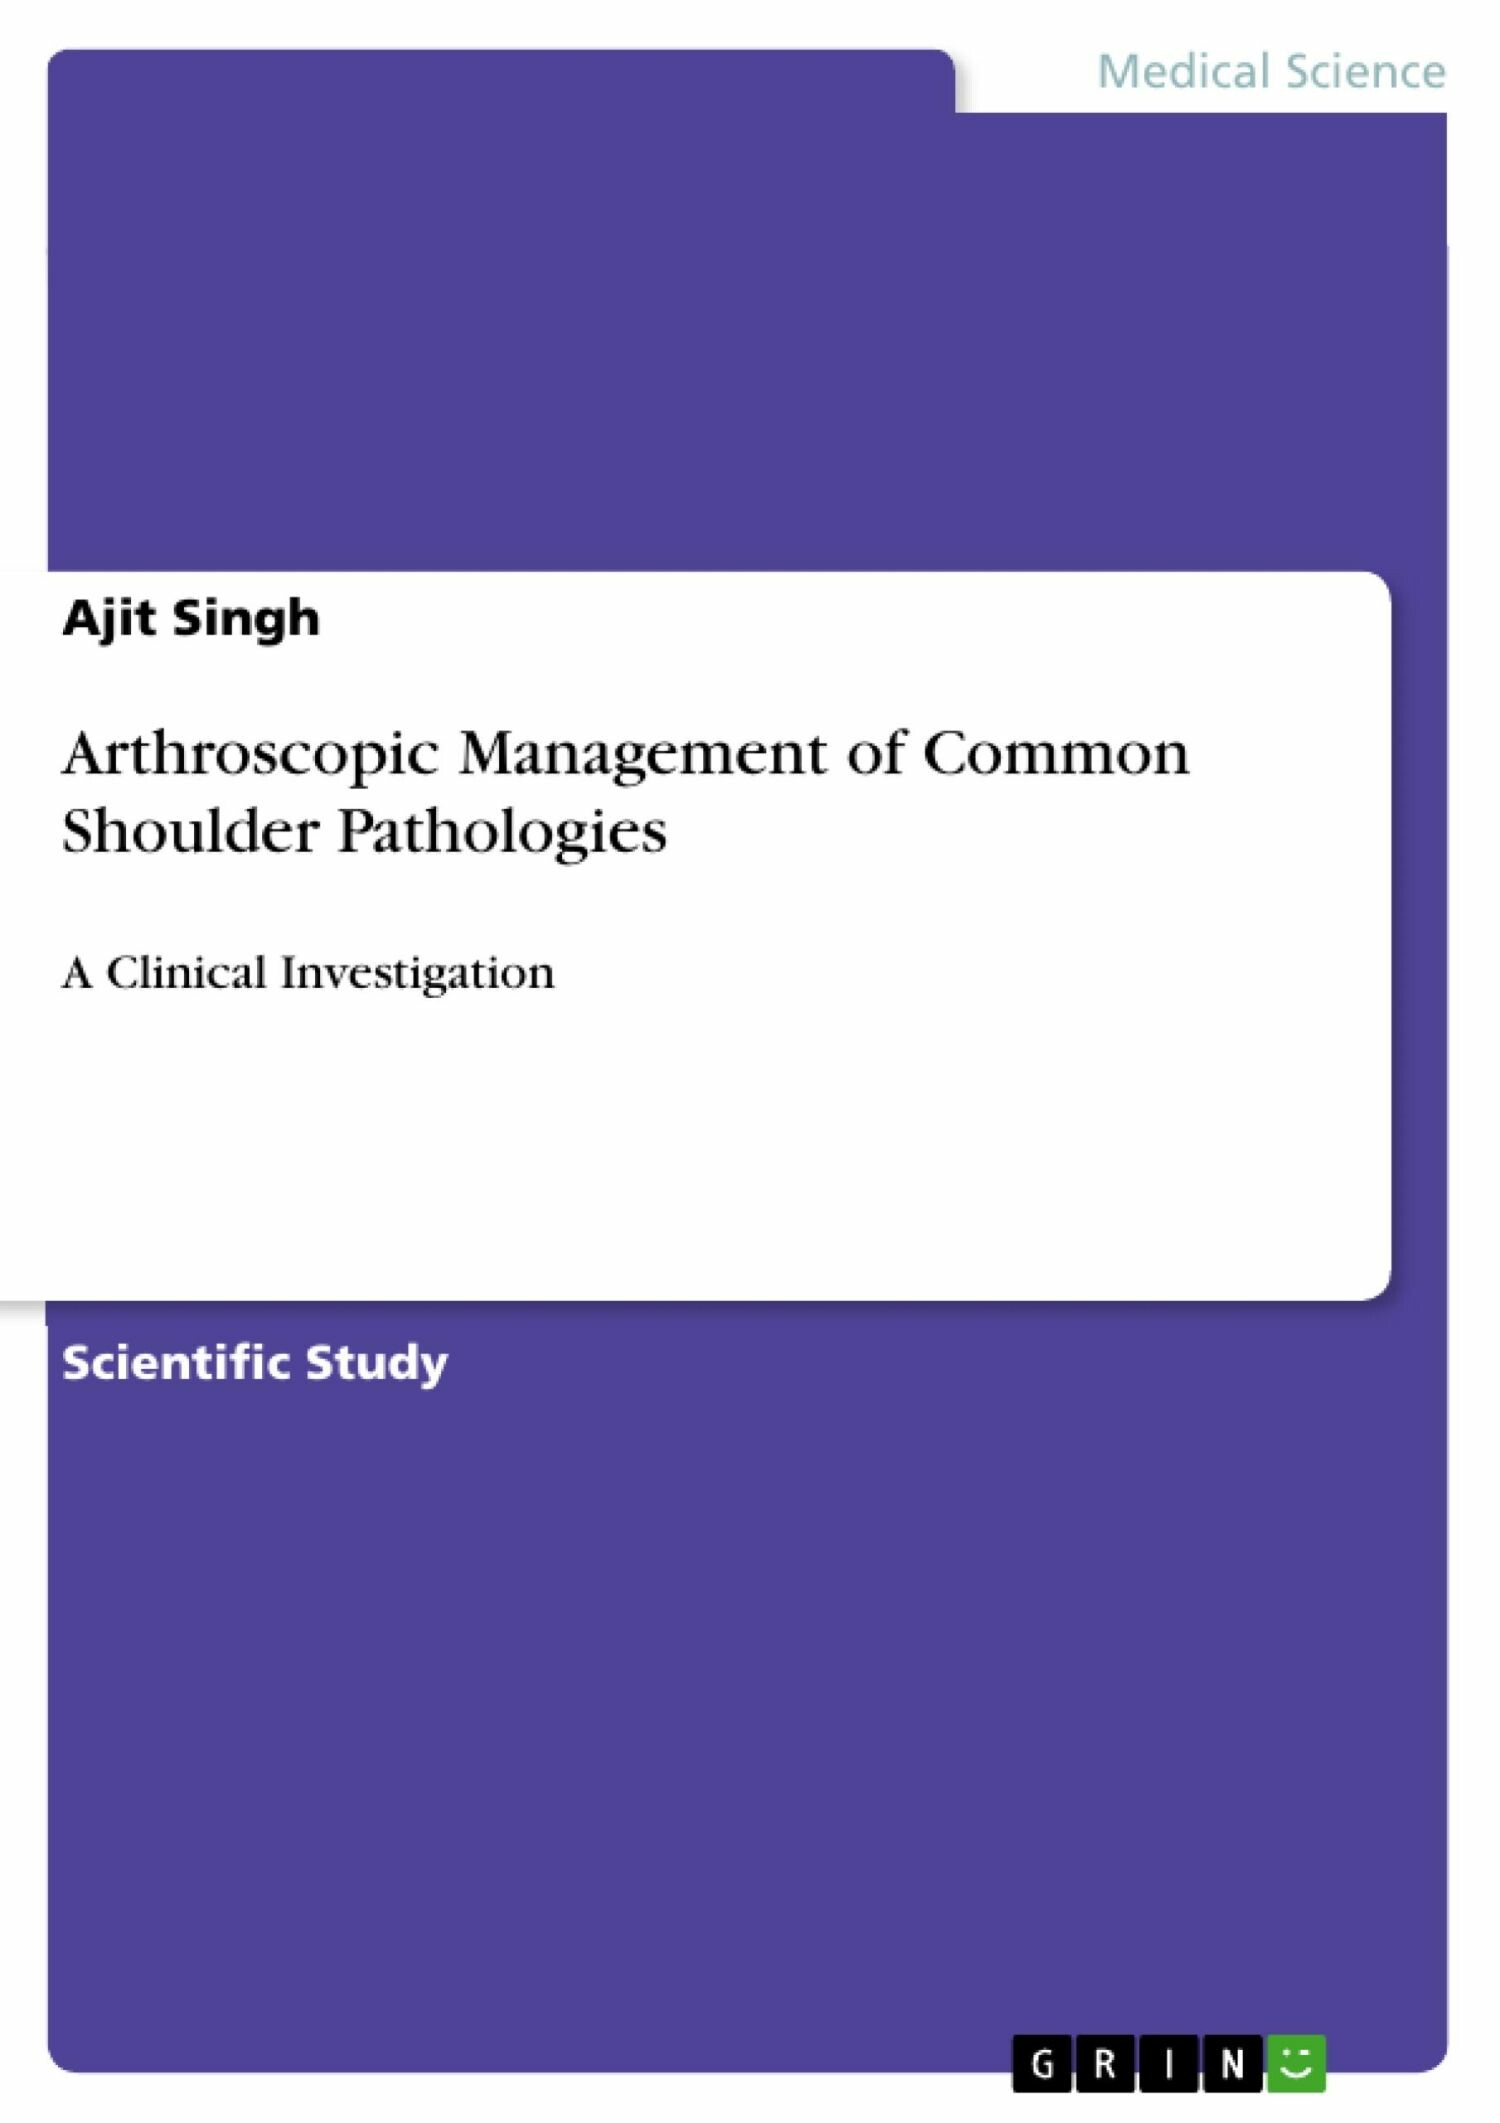 Arthroscopic Management of Common Shoulder Pathologies